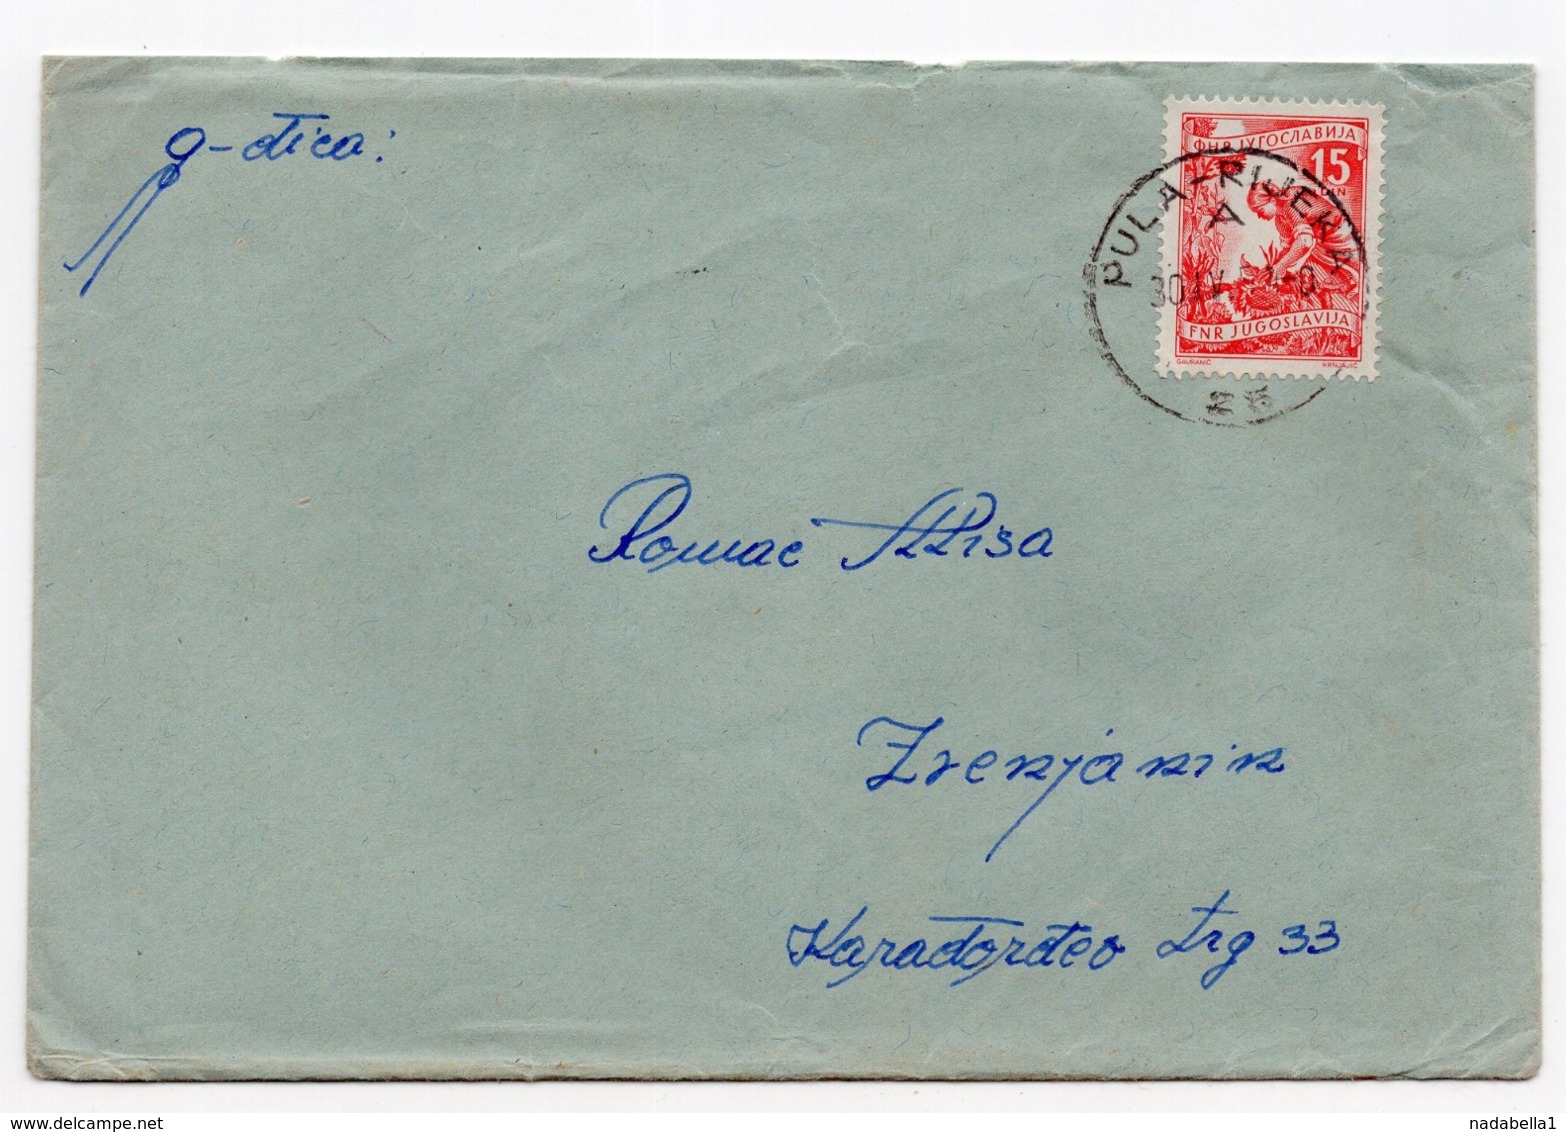 1952 YUGOSLAVIA,CROATIA, PULA TO ZRENJANIN, TPO PULA - RIJEKA NO. 25 - Covers & Documents